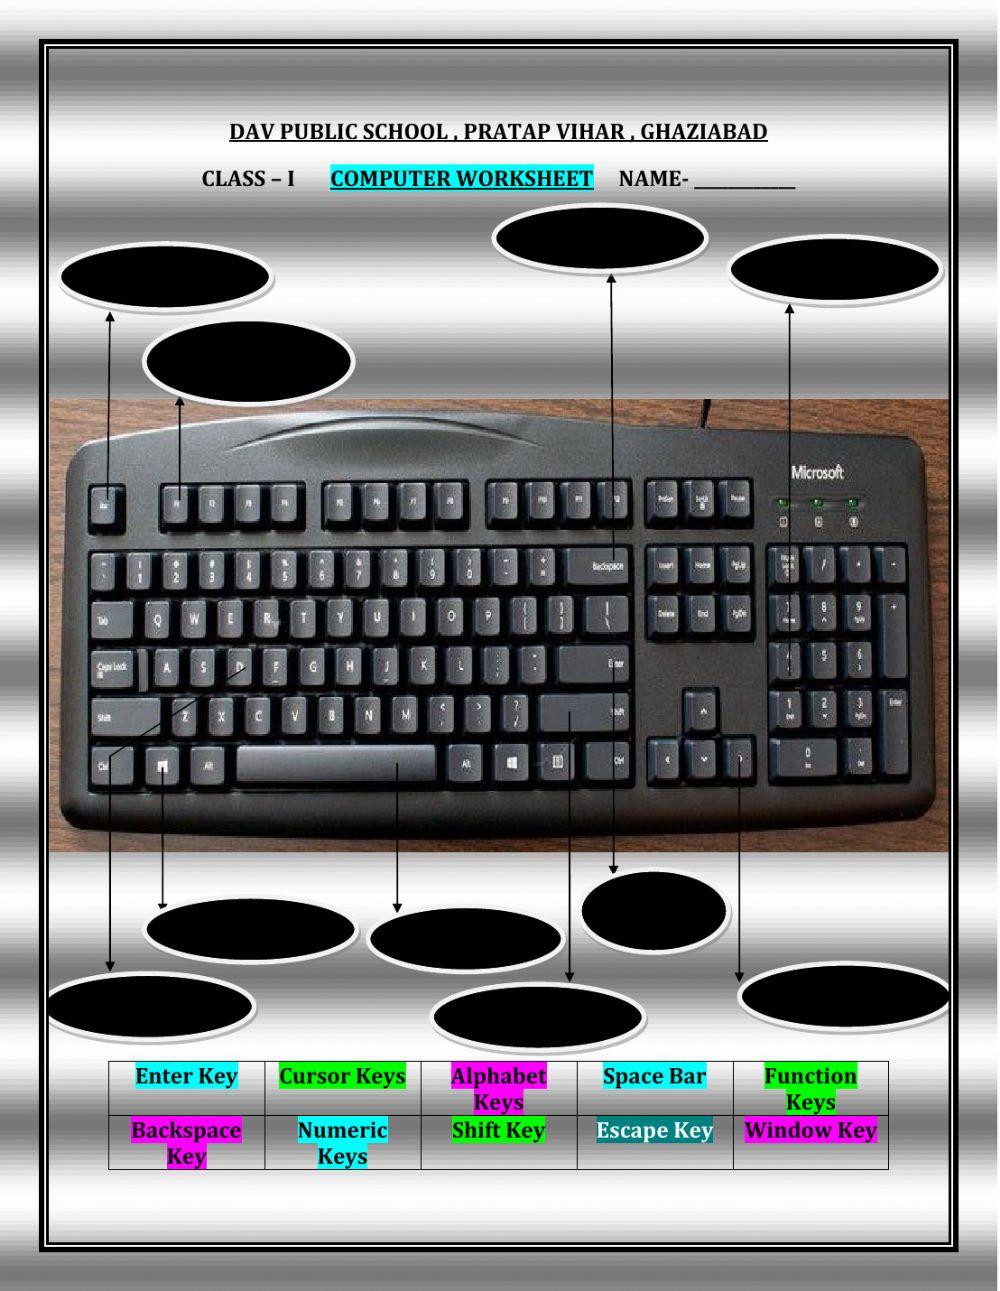 A Computer Keyboard